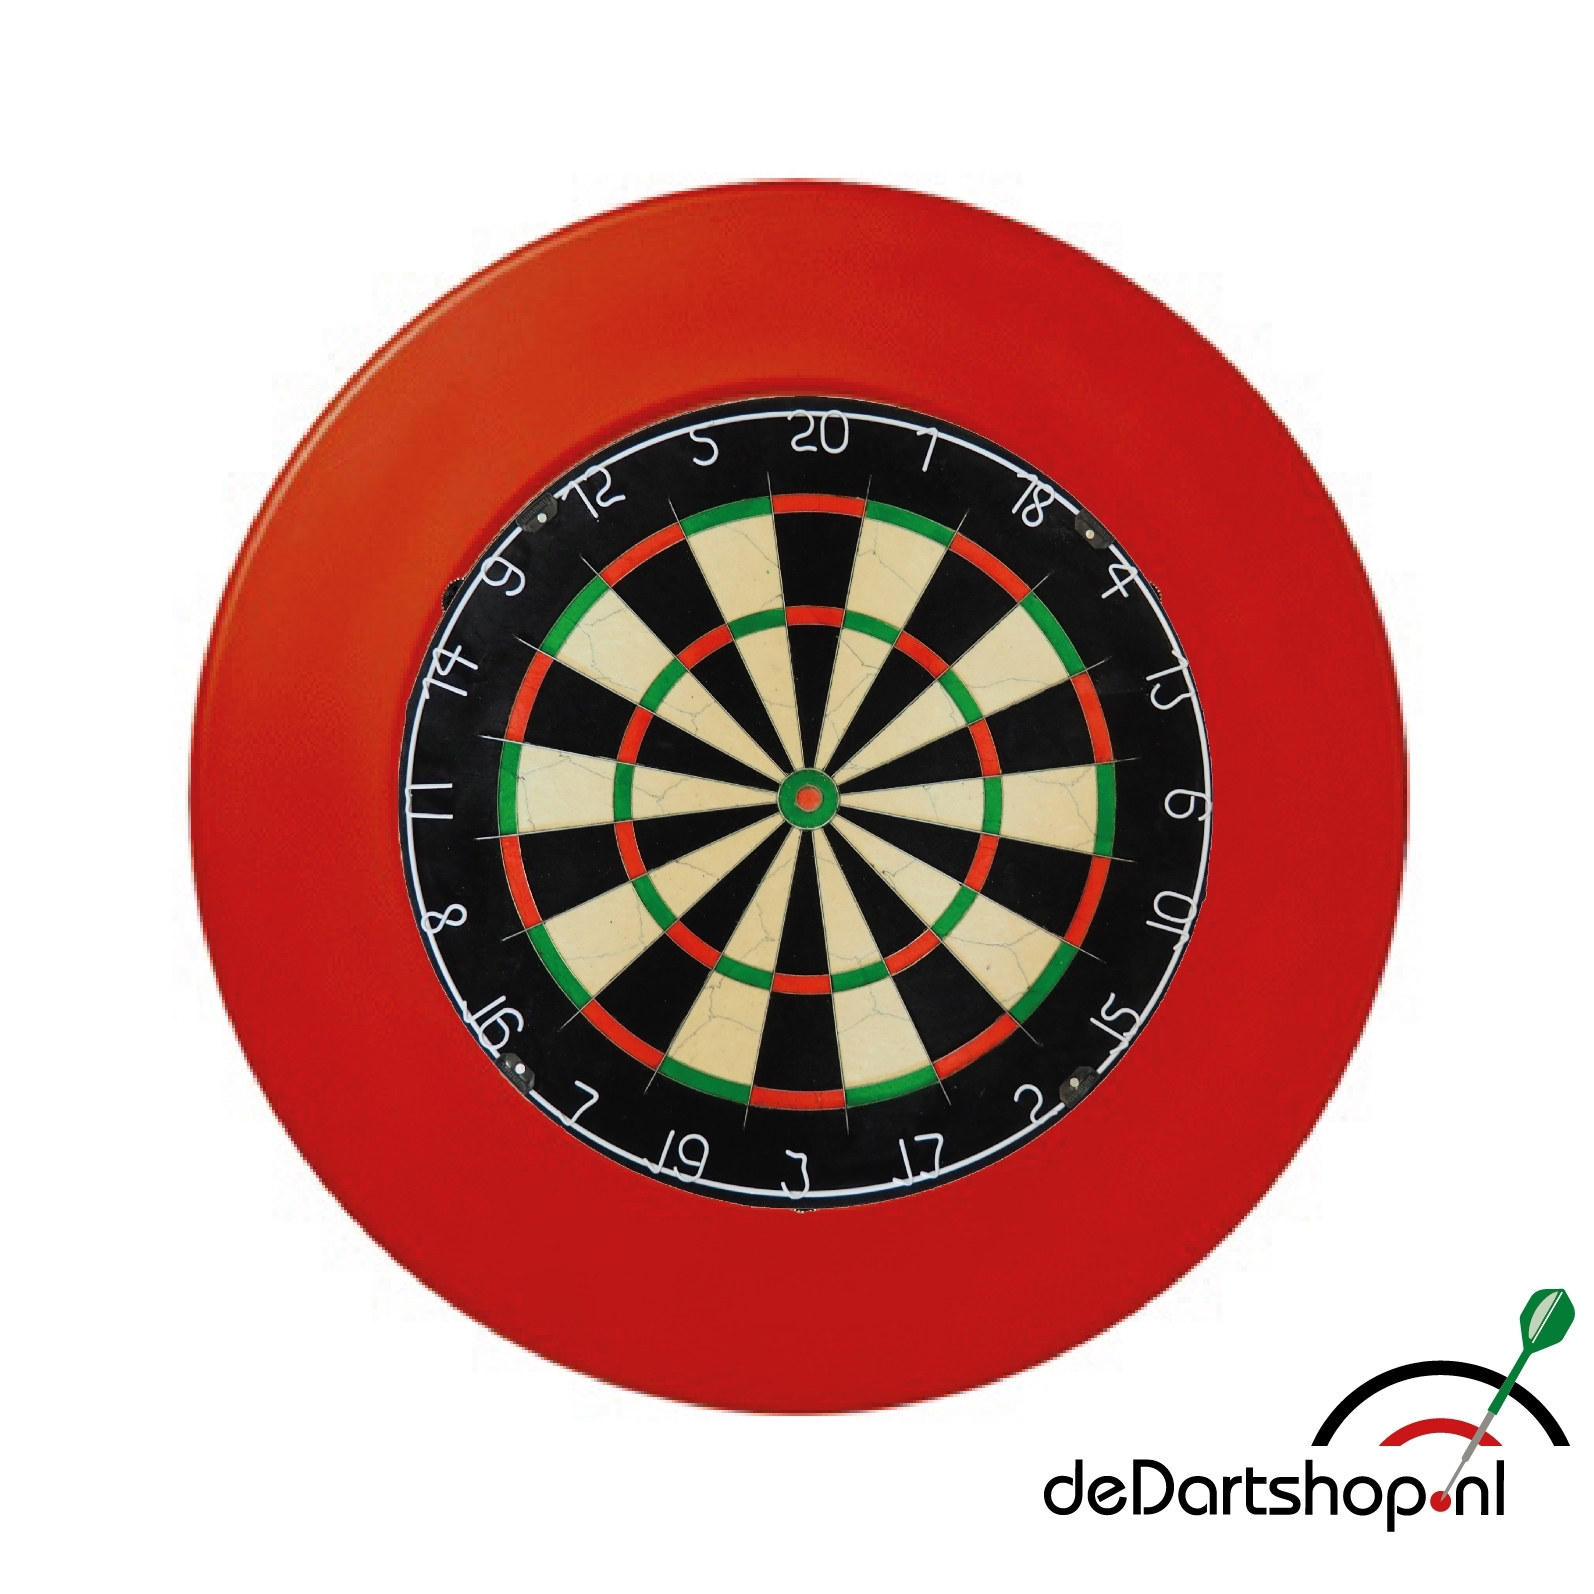 Rusteloosheid toenemen Stationair Plain deDartshop dartbord (extra dunne bedrading) plus surround ring rood -